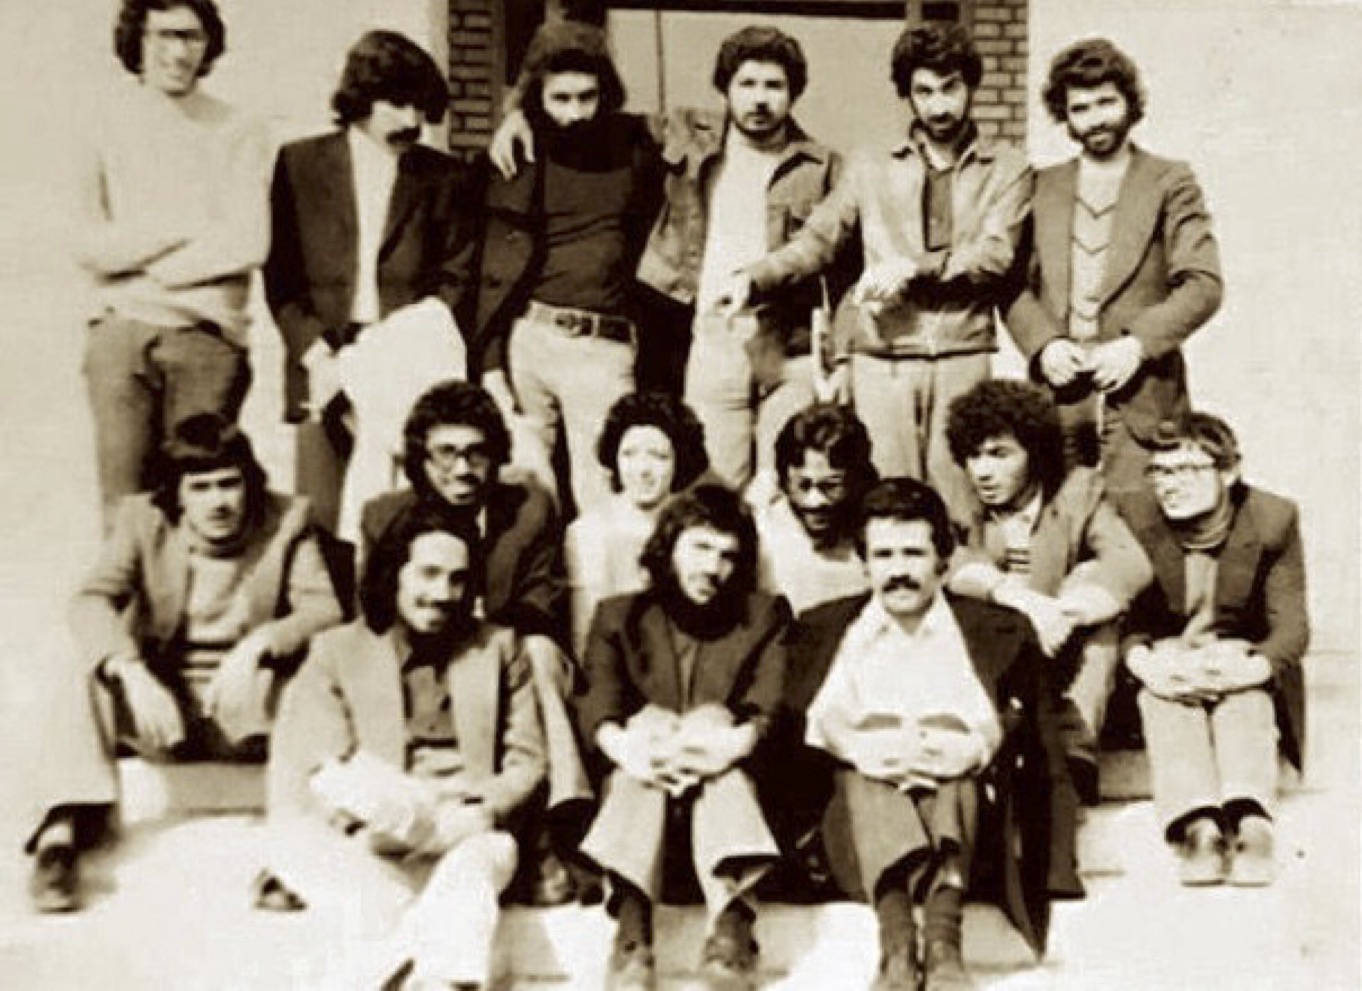 Top row: far right: Mahdi Sabaghzadeh (Mashhad Branch); far left: Reza Adl. Middle row right to left: Ardeshir Shalileh (Khorramabad Branch), Hadi Hosseinzadeh, Basir Nasibi and his wife Nasrin Amirsedghi, Naser Gholamrezayi, Rashid Davari. Bottom row right to left: Abdollah Bakide (Hamedan Branch Manager), Mehrdad Tadyin (Mashhad Branch Manager)